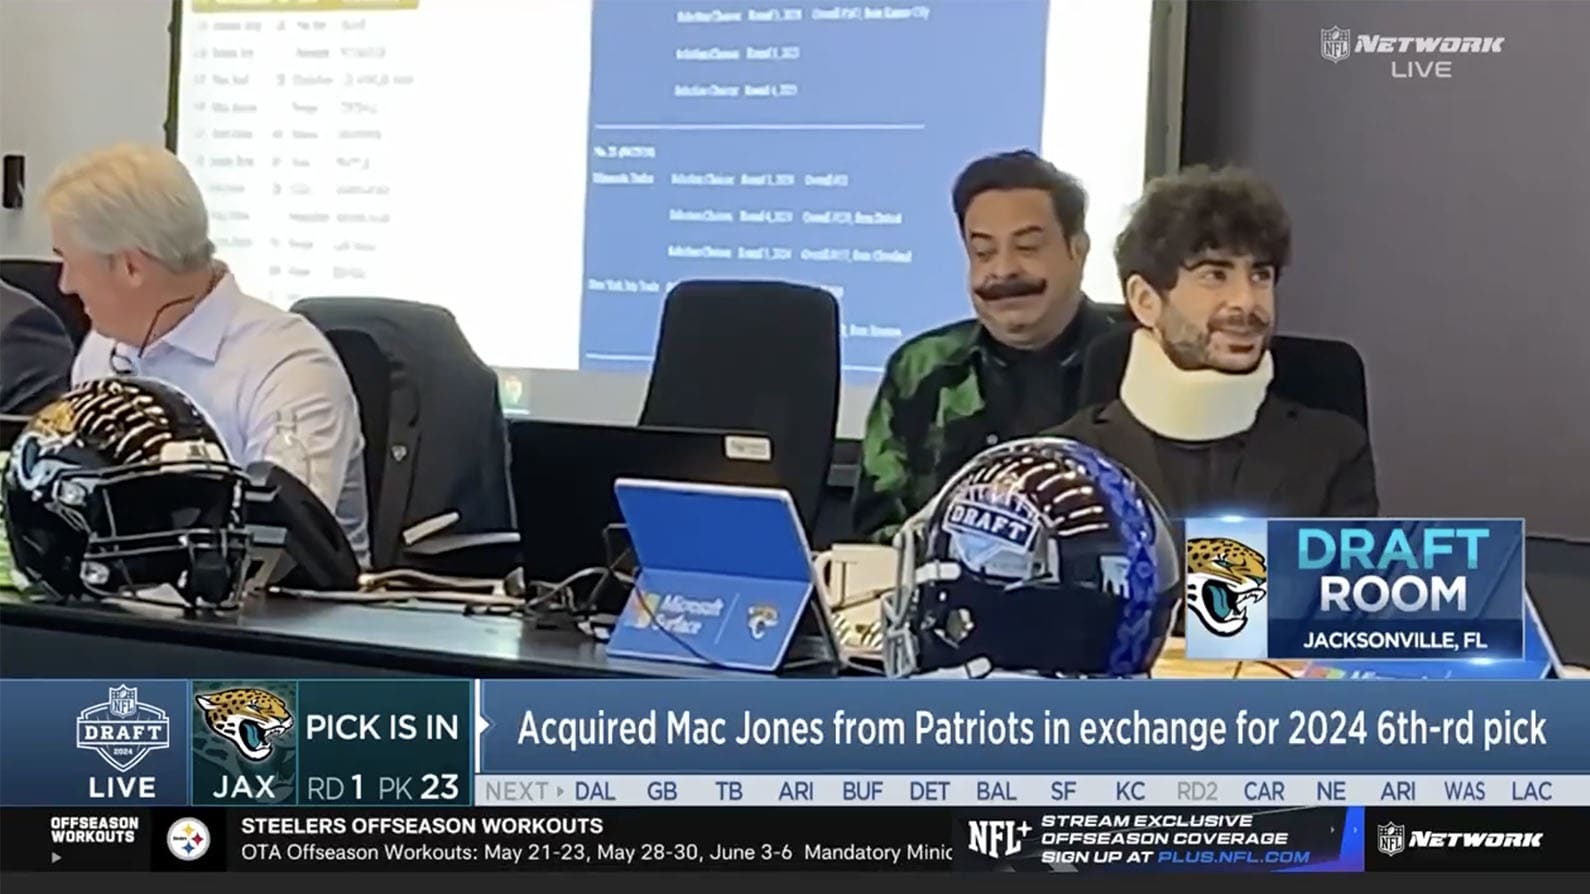 Tony Khan in the Jaguars' draft room